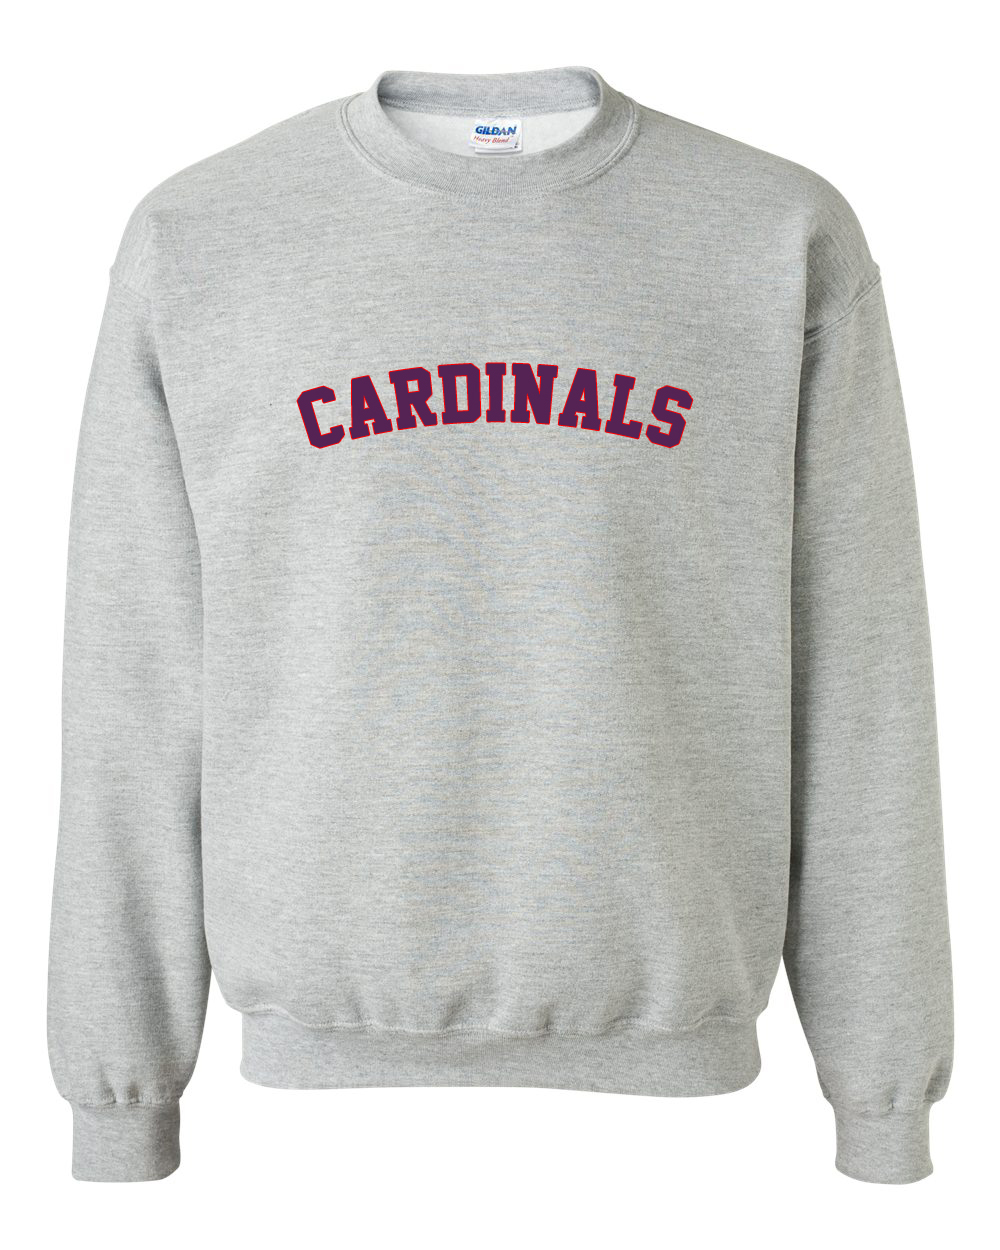 Cardinals Sweatshirt | anncloset.com